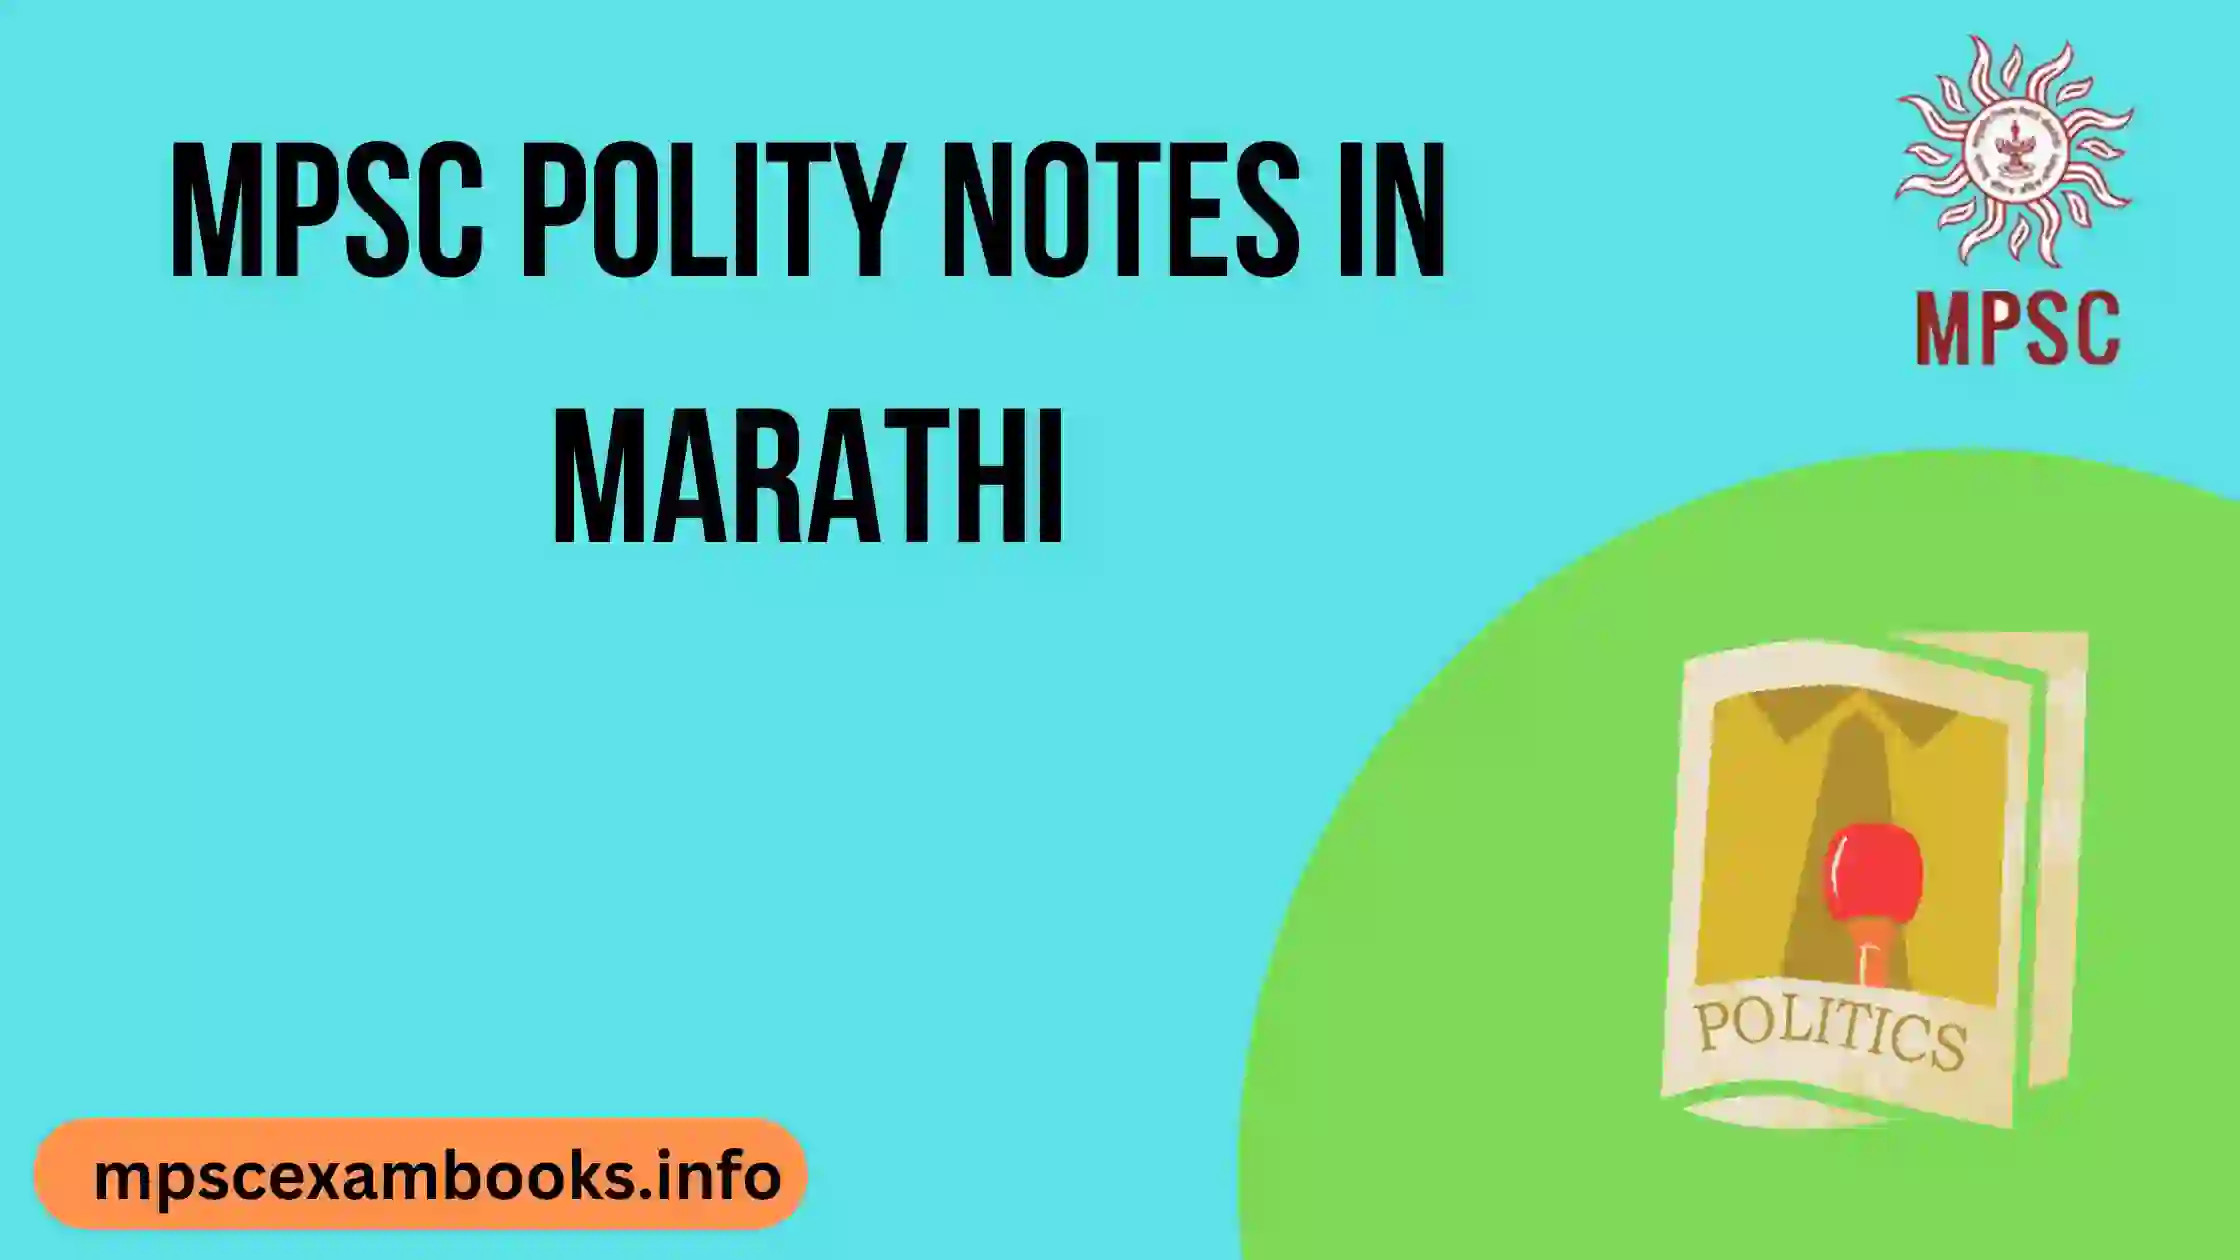 MPSC polity notes in Marathi